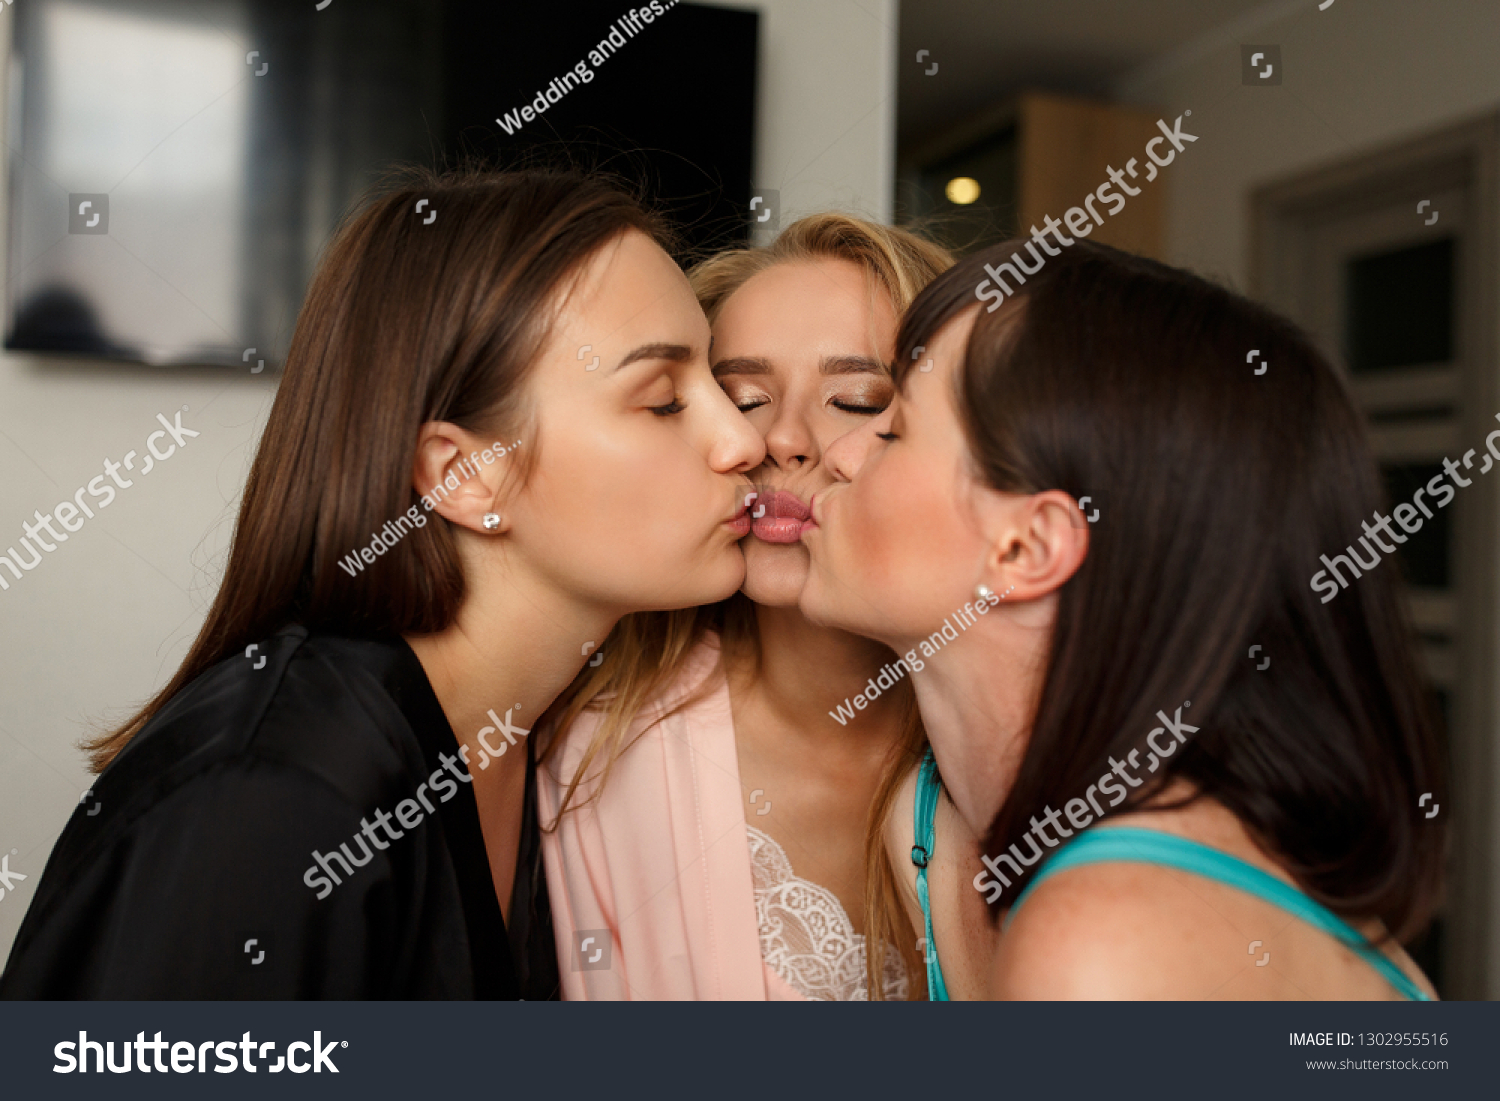 carole turnbull share girls kissing and having photos